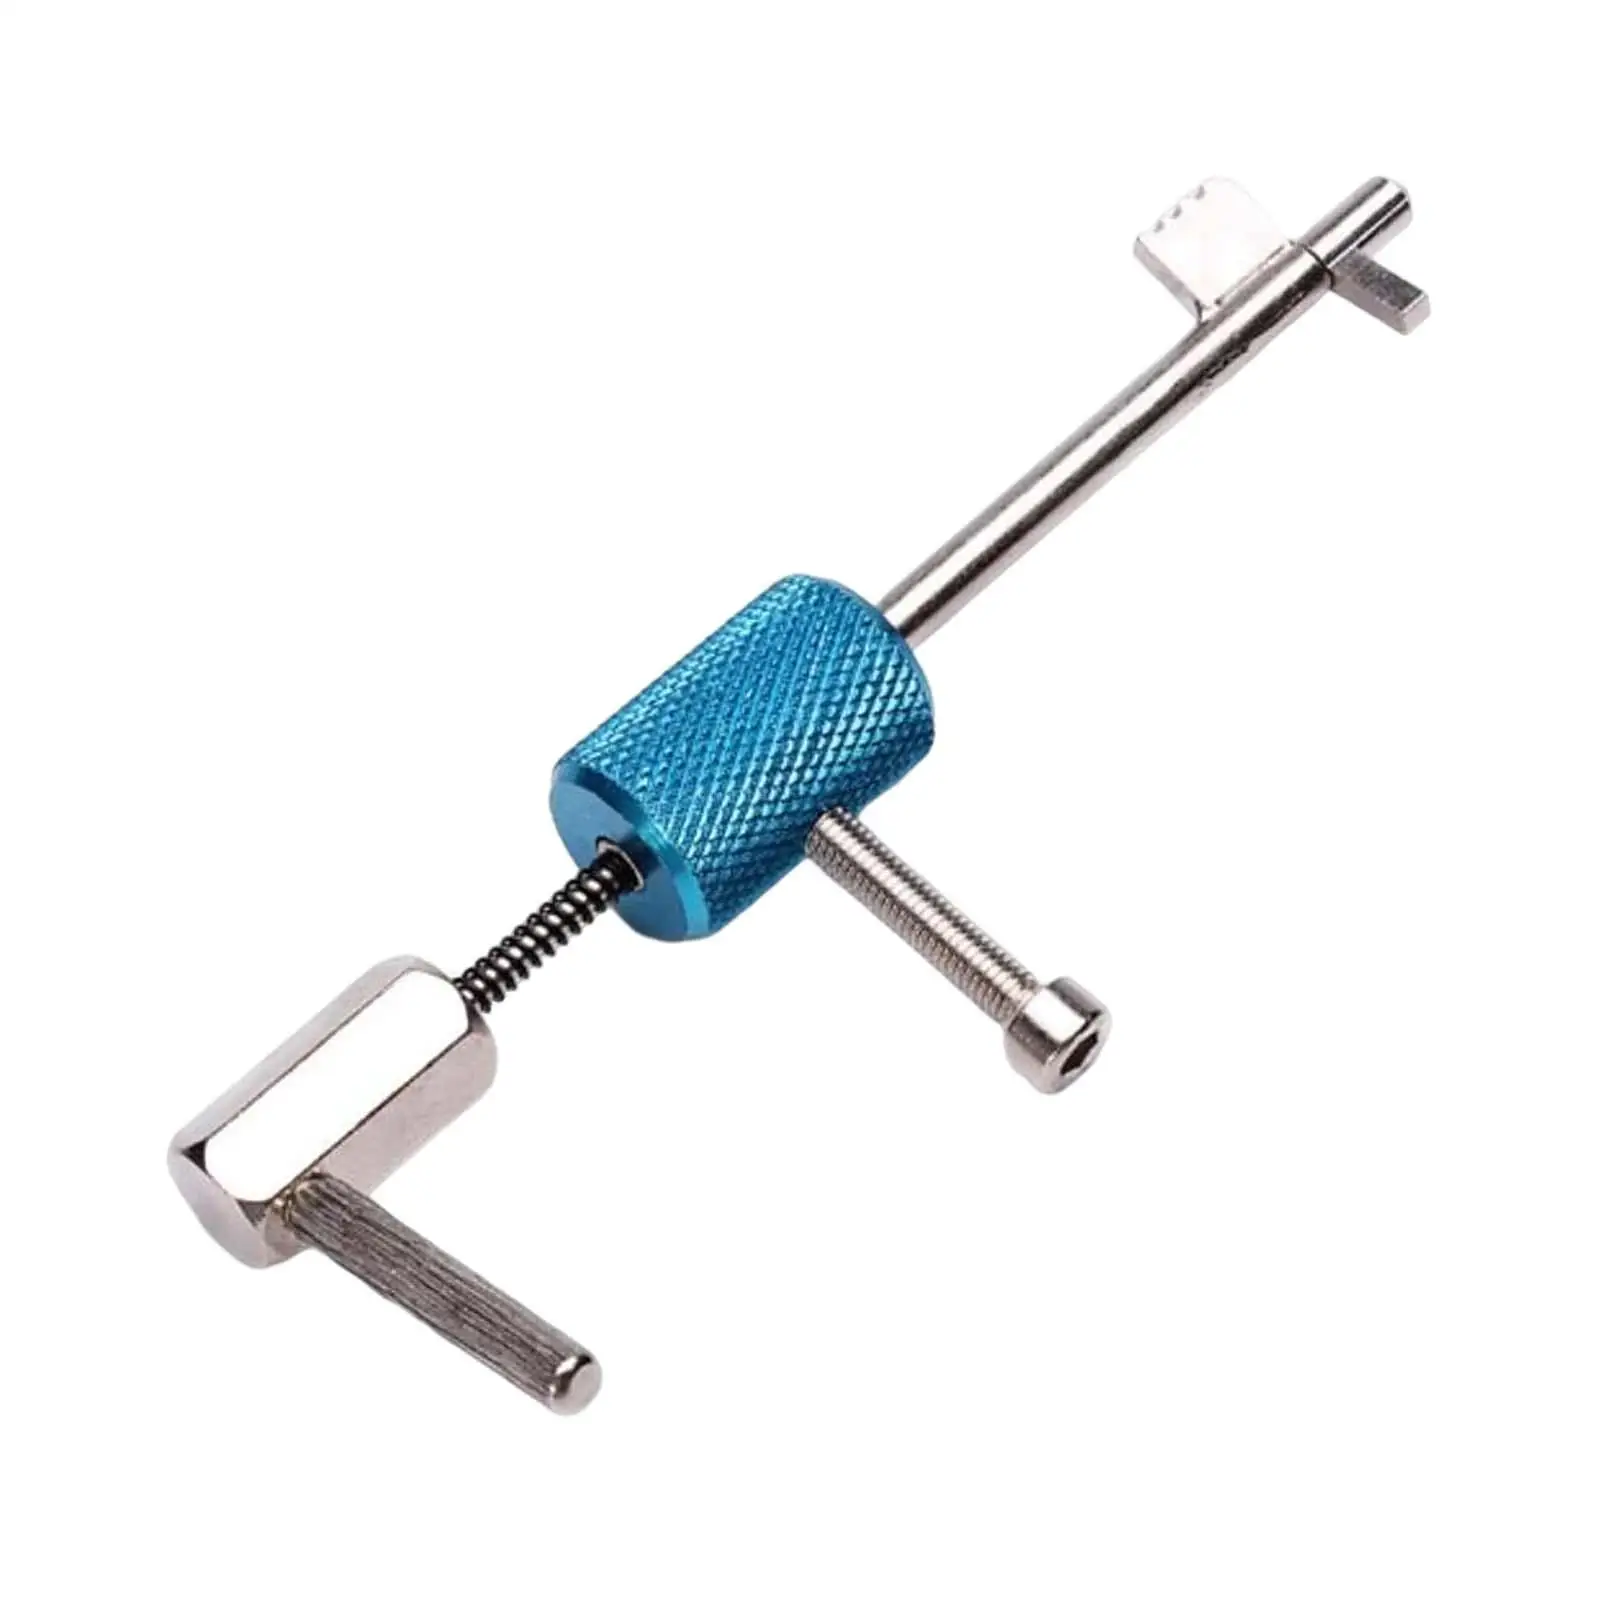 

Stainless Steel Lock Openning Tool Easy to Use Locks Picks Hand Tool Wrench Open Civil Lock Picking Tools Civil Lock Opener